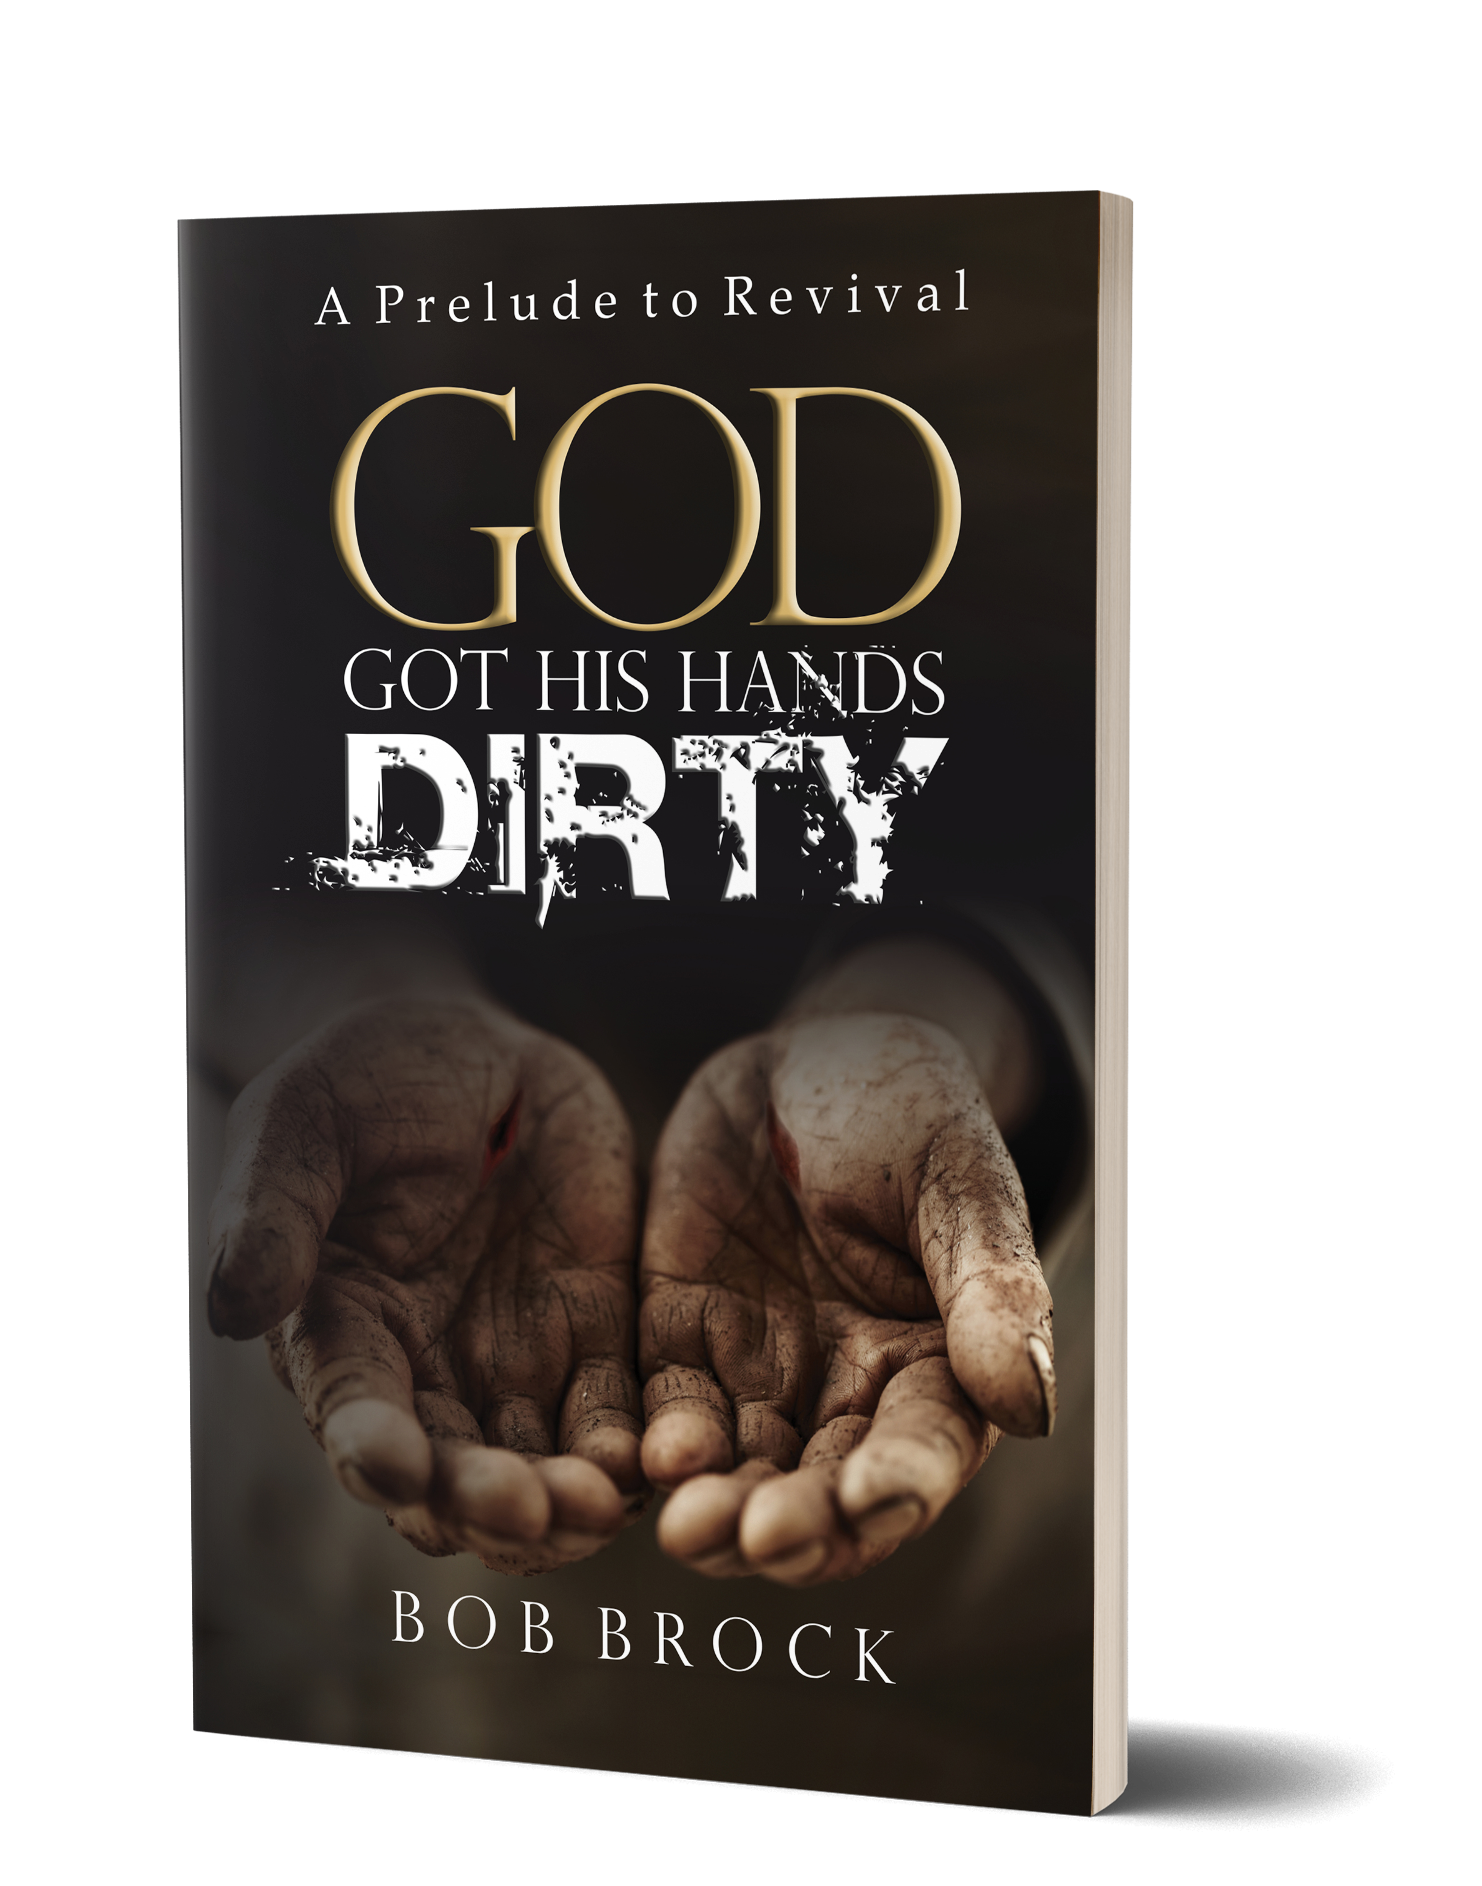 God Got His Hands Dirty by Bob Brock